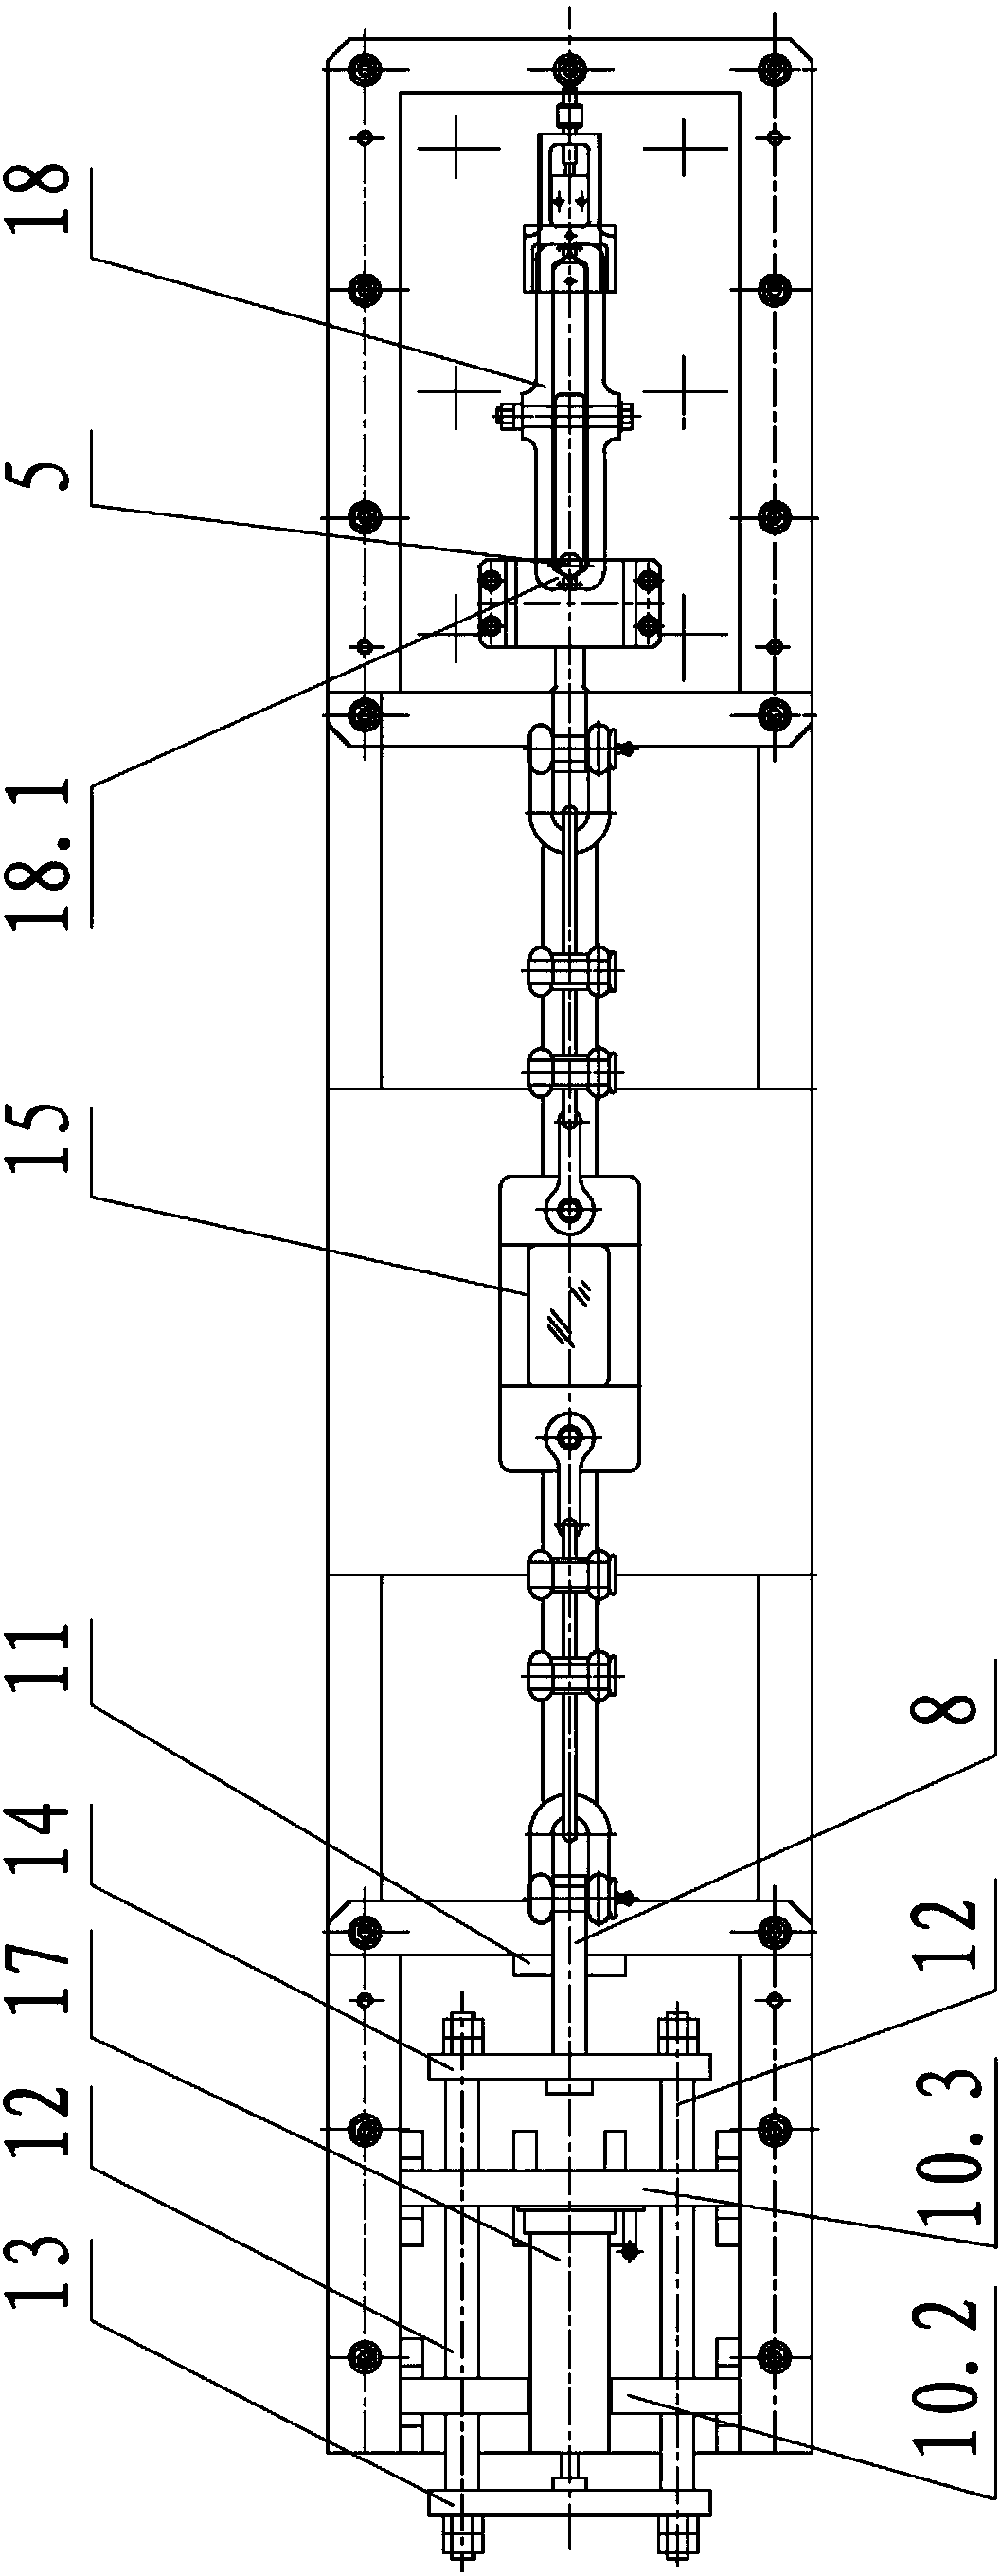 A locking mechanism analog force measuring device